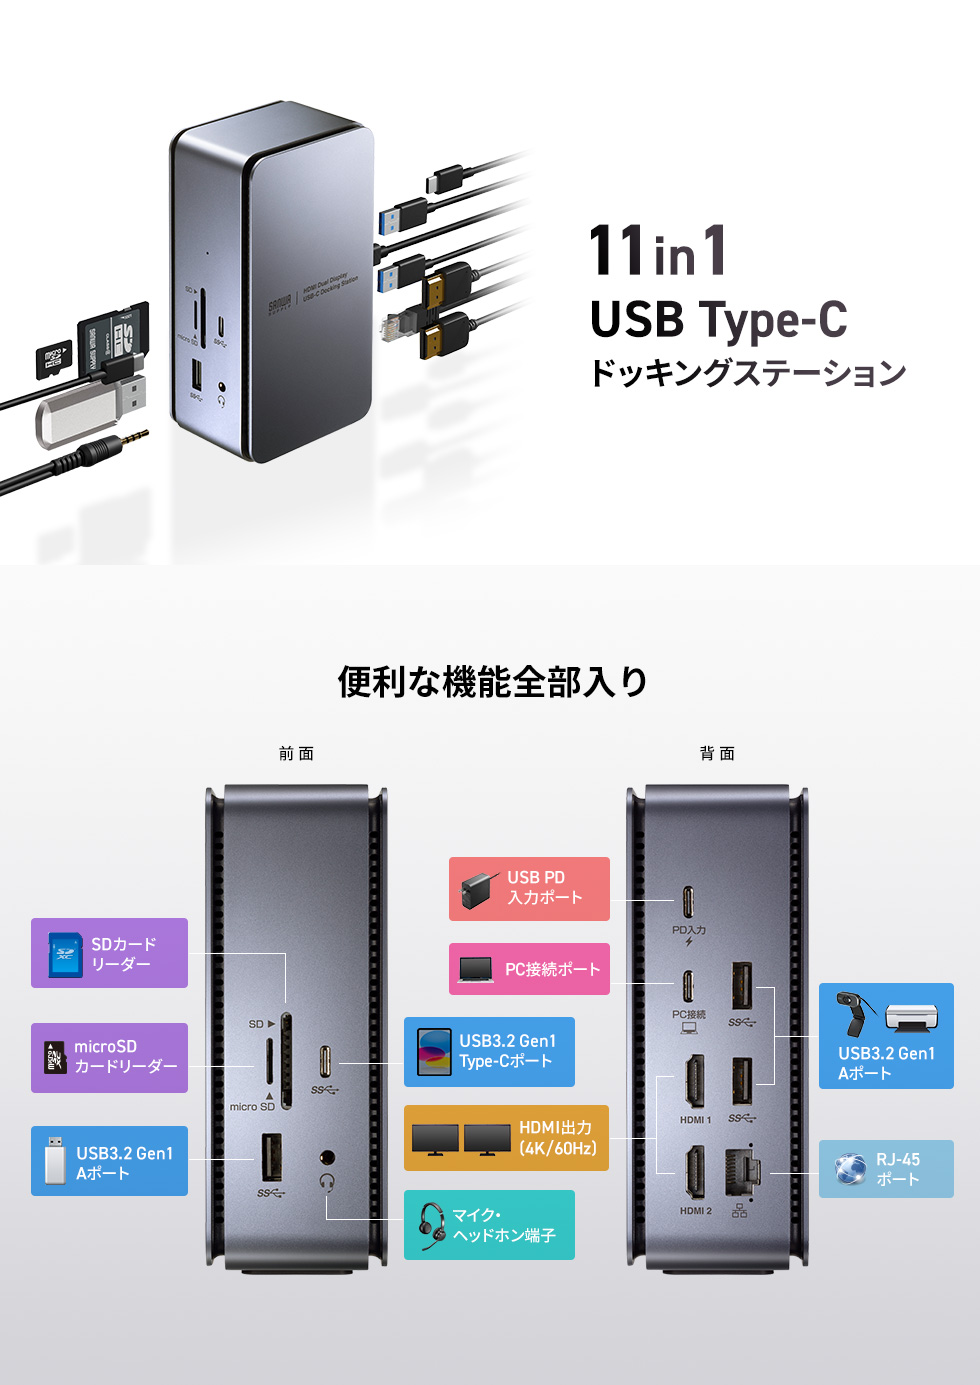 11in1 USB Type-C hbLOXe[V ֗ȋ@\S